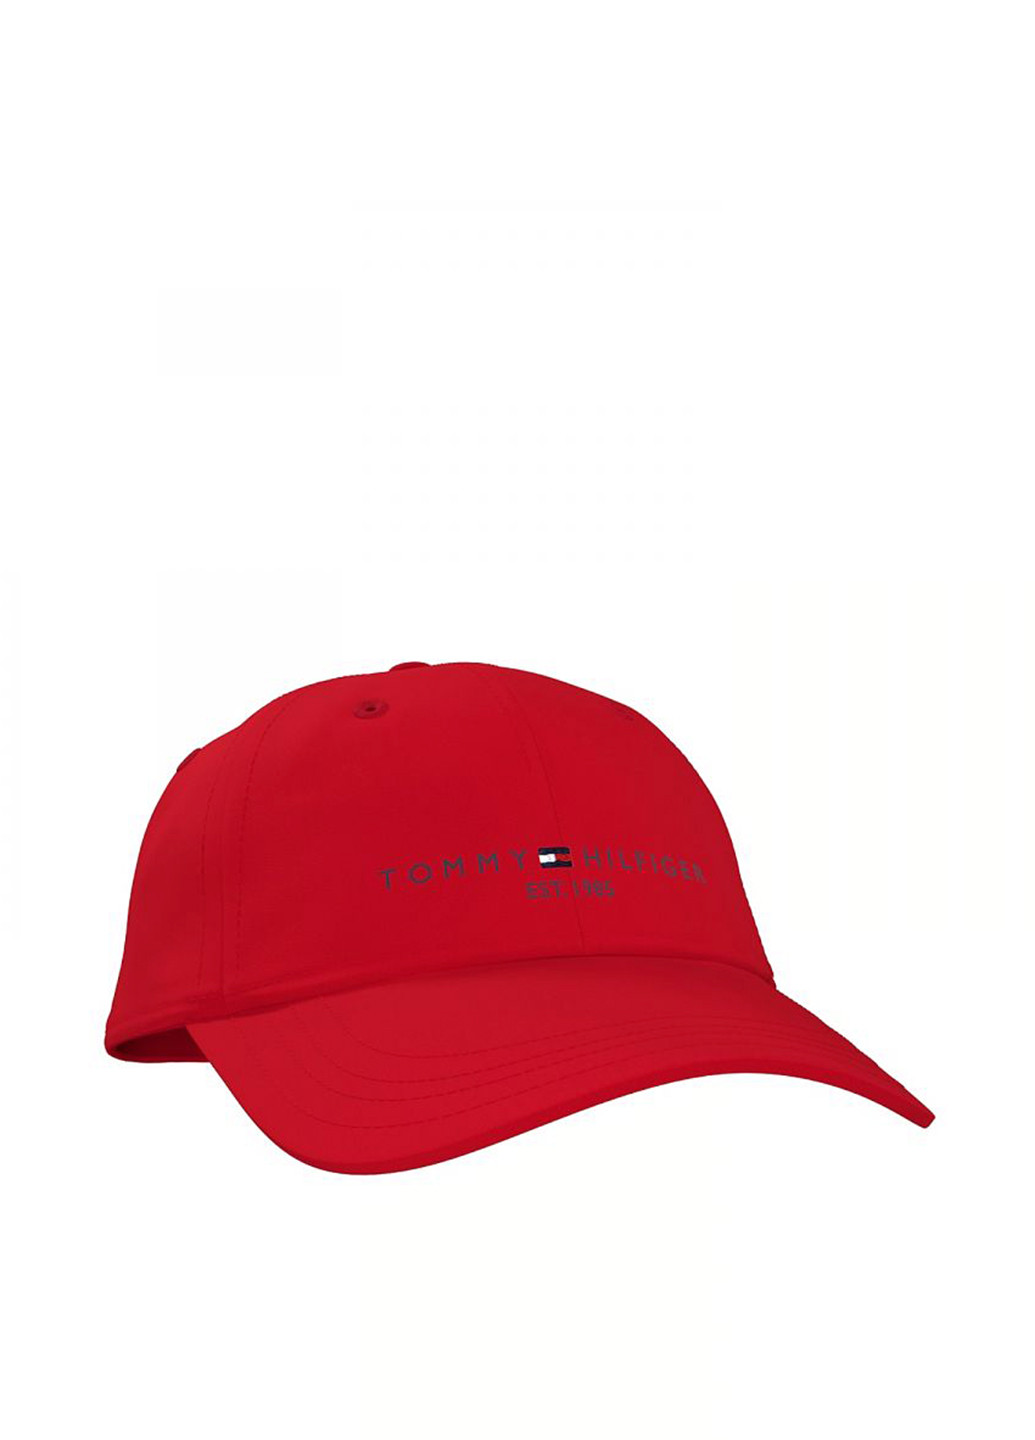 Кепка Tommy Hilfiger бейсболка логотип красная кэжуал хлопок